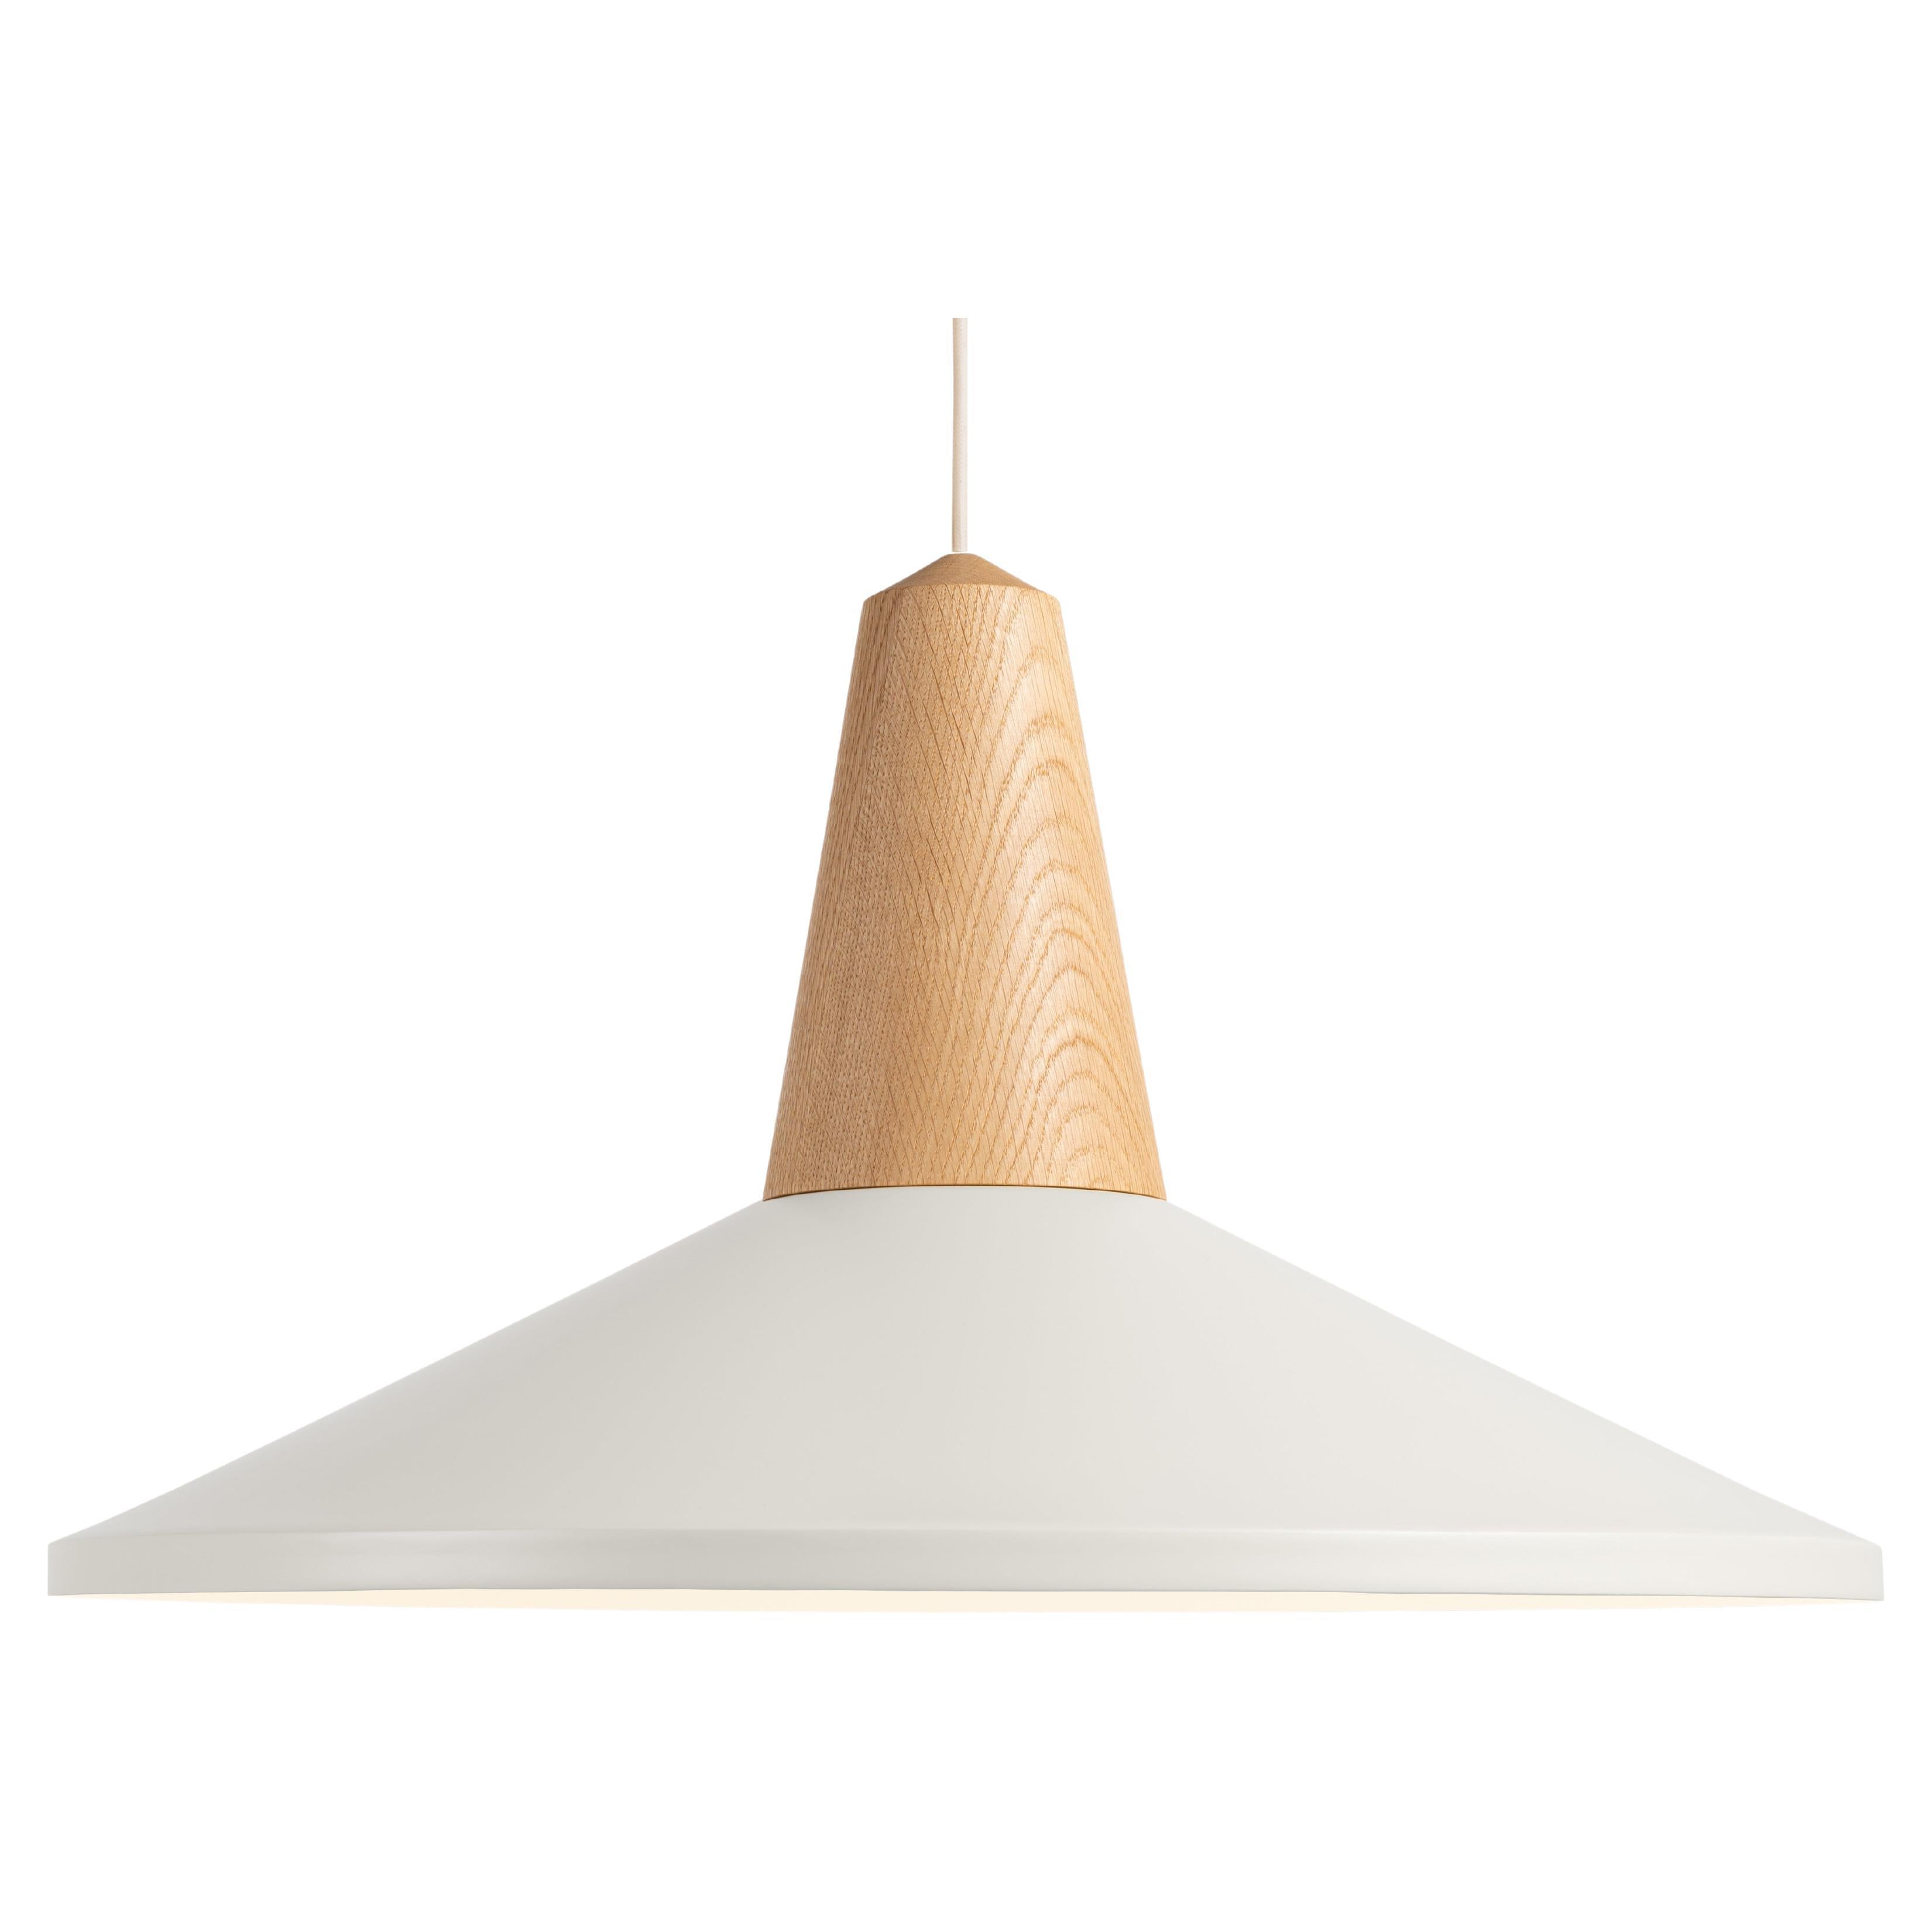 Schneid Studio Eikon Shell White, Oak, Pendant Lamp For Sale